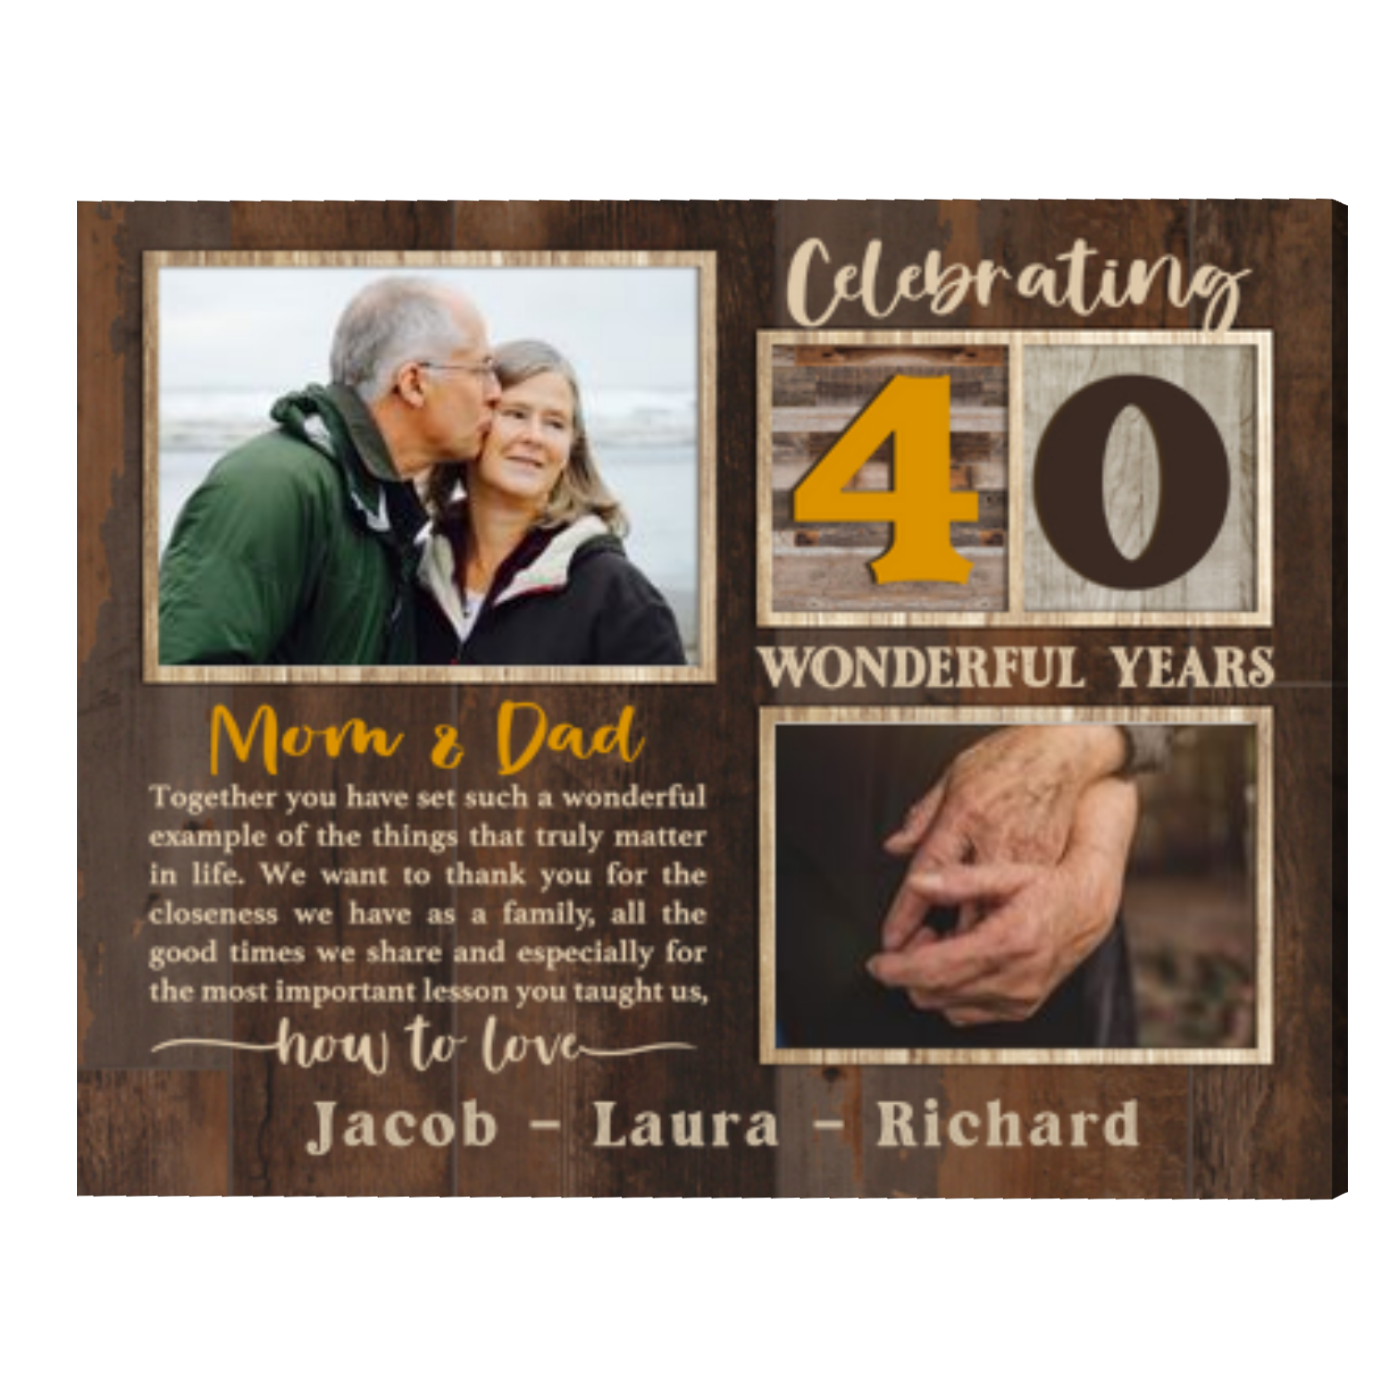 Anniversary Scrapbook Wedding or Anniversary Gift Idea Romantic